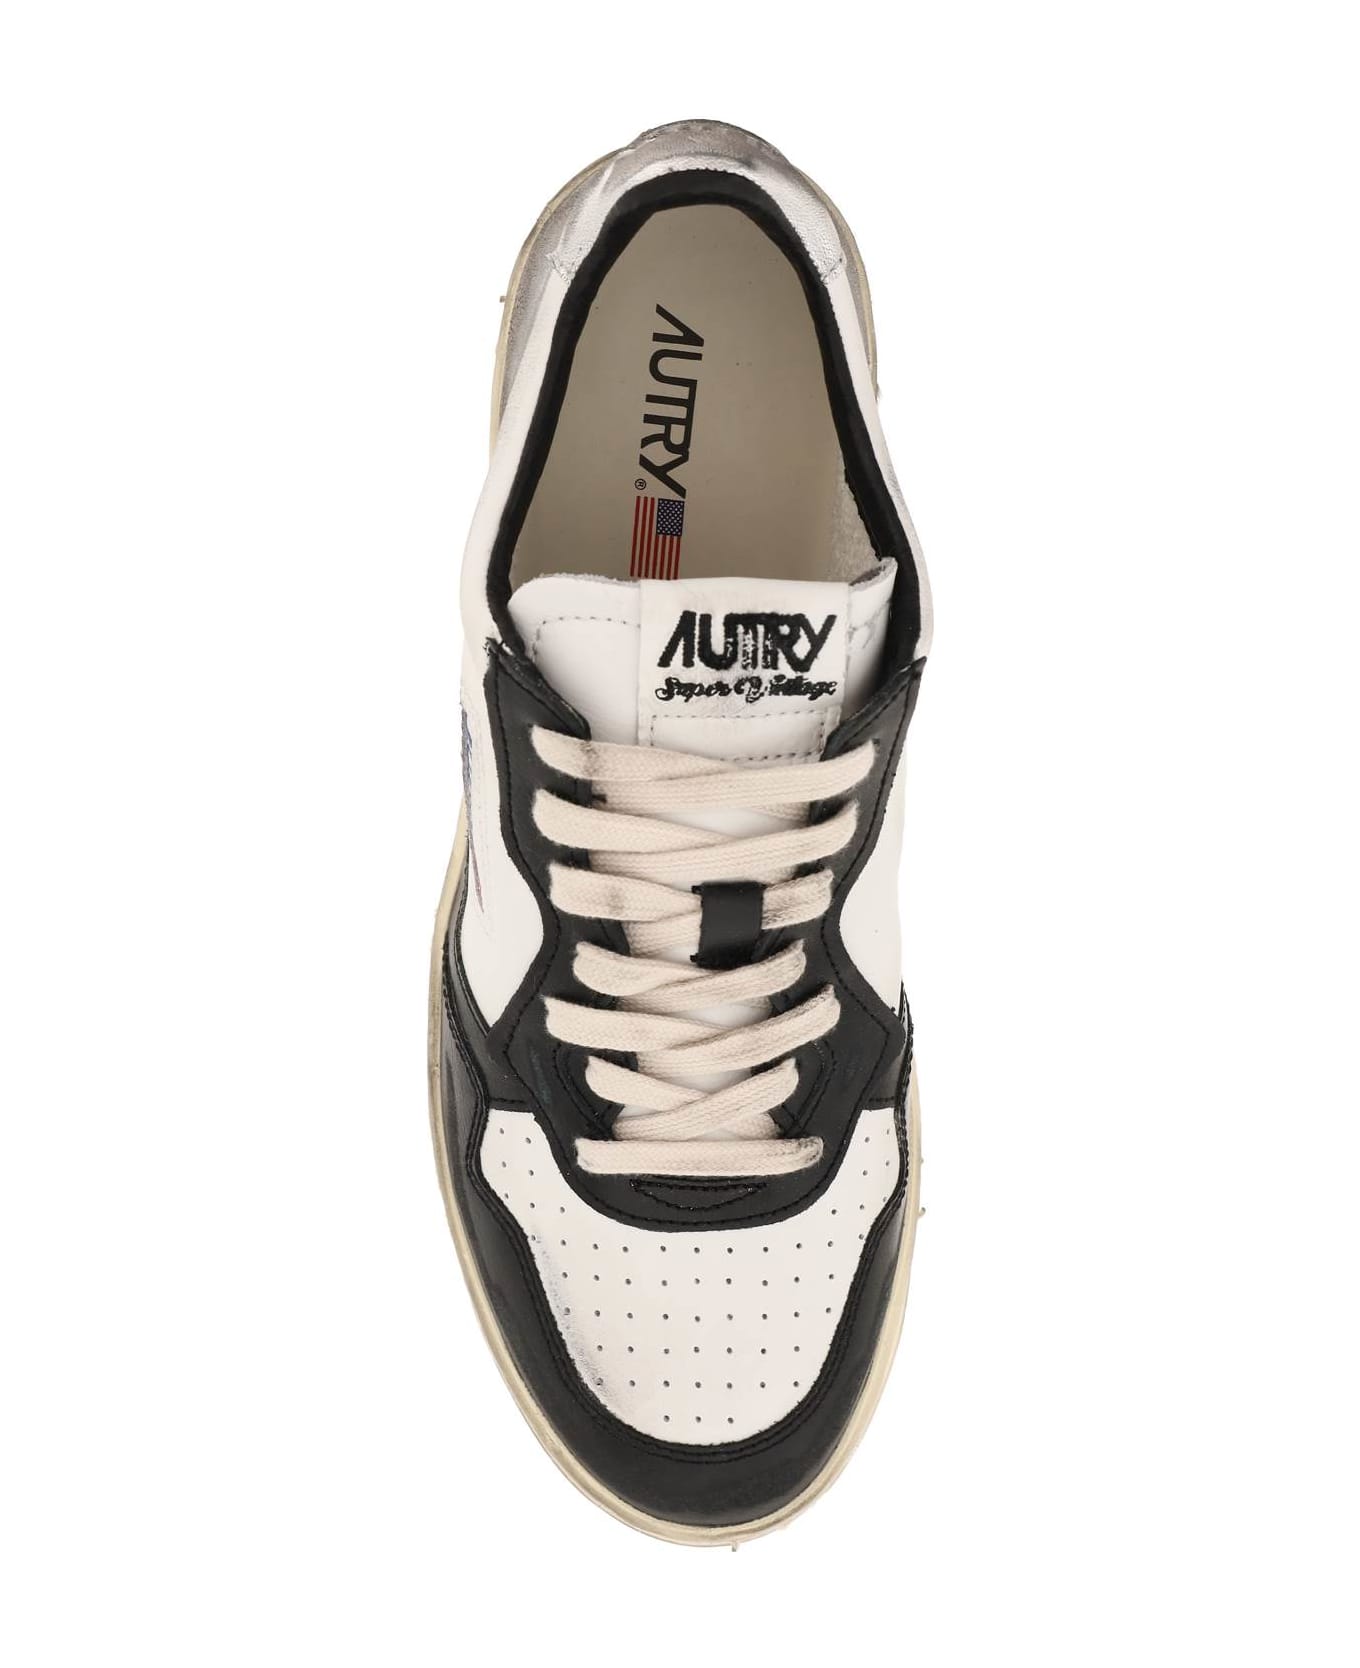 Autry Super Vintage Low Sneakers - Black スニーカー